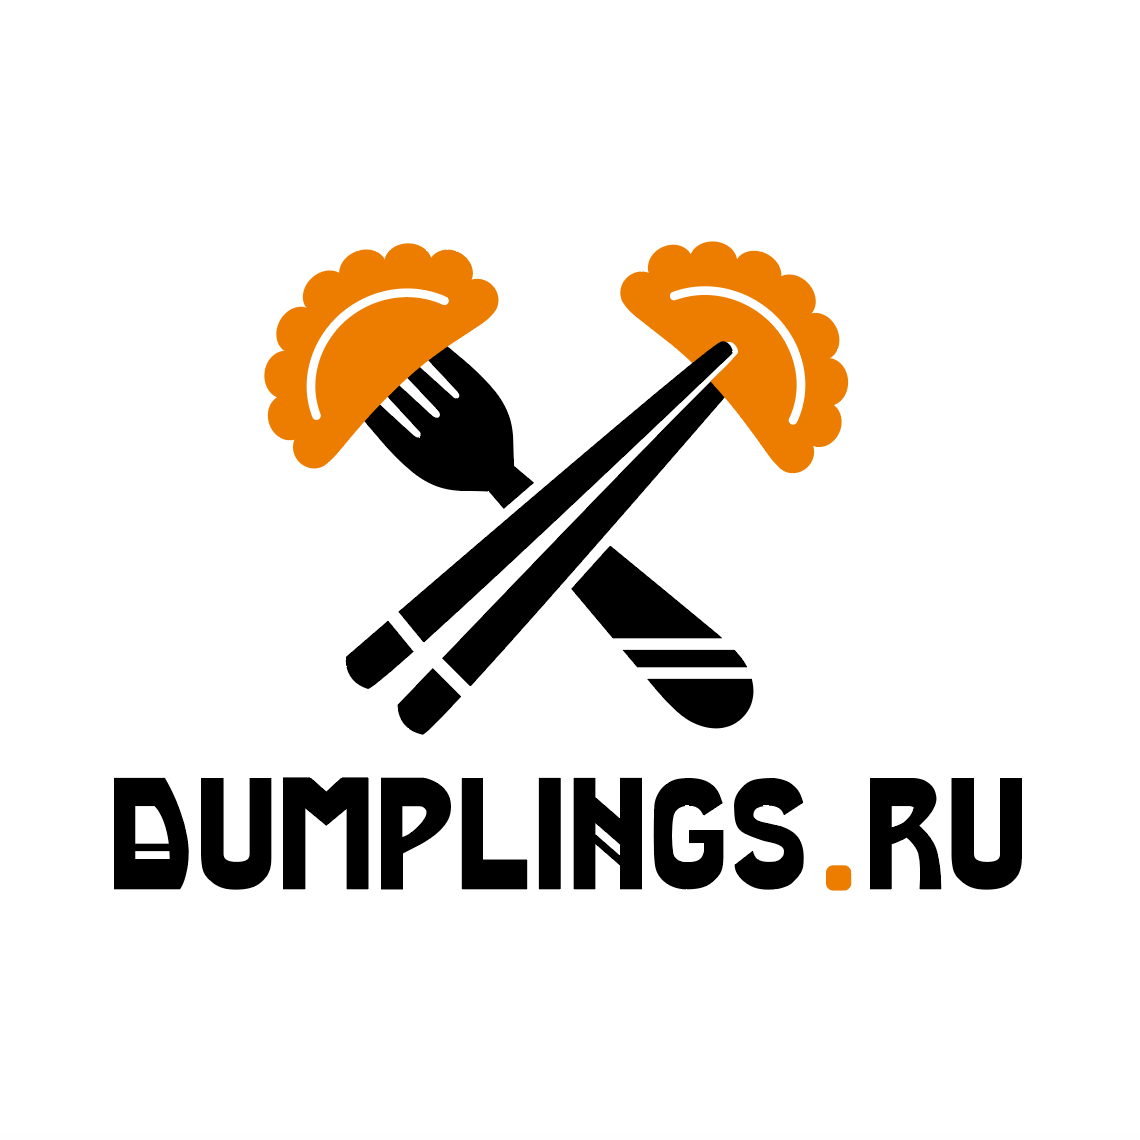 dumplings ru logo